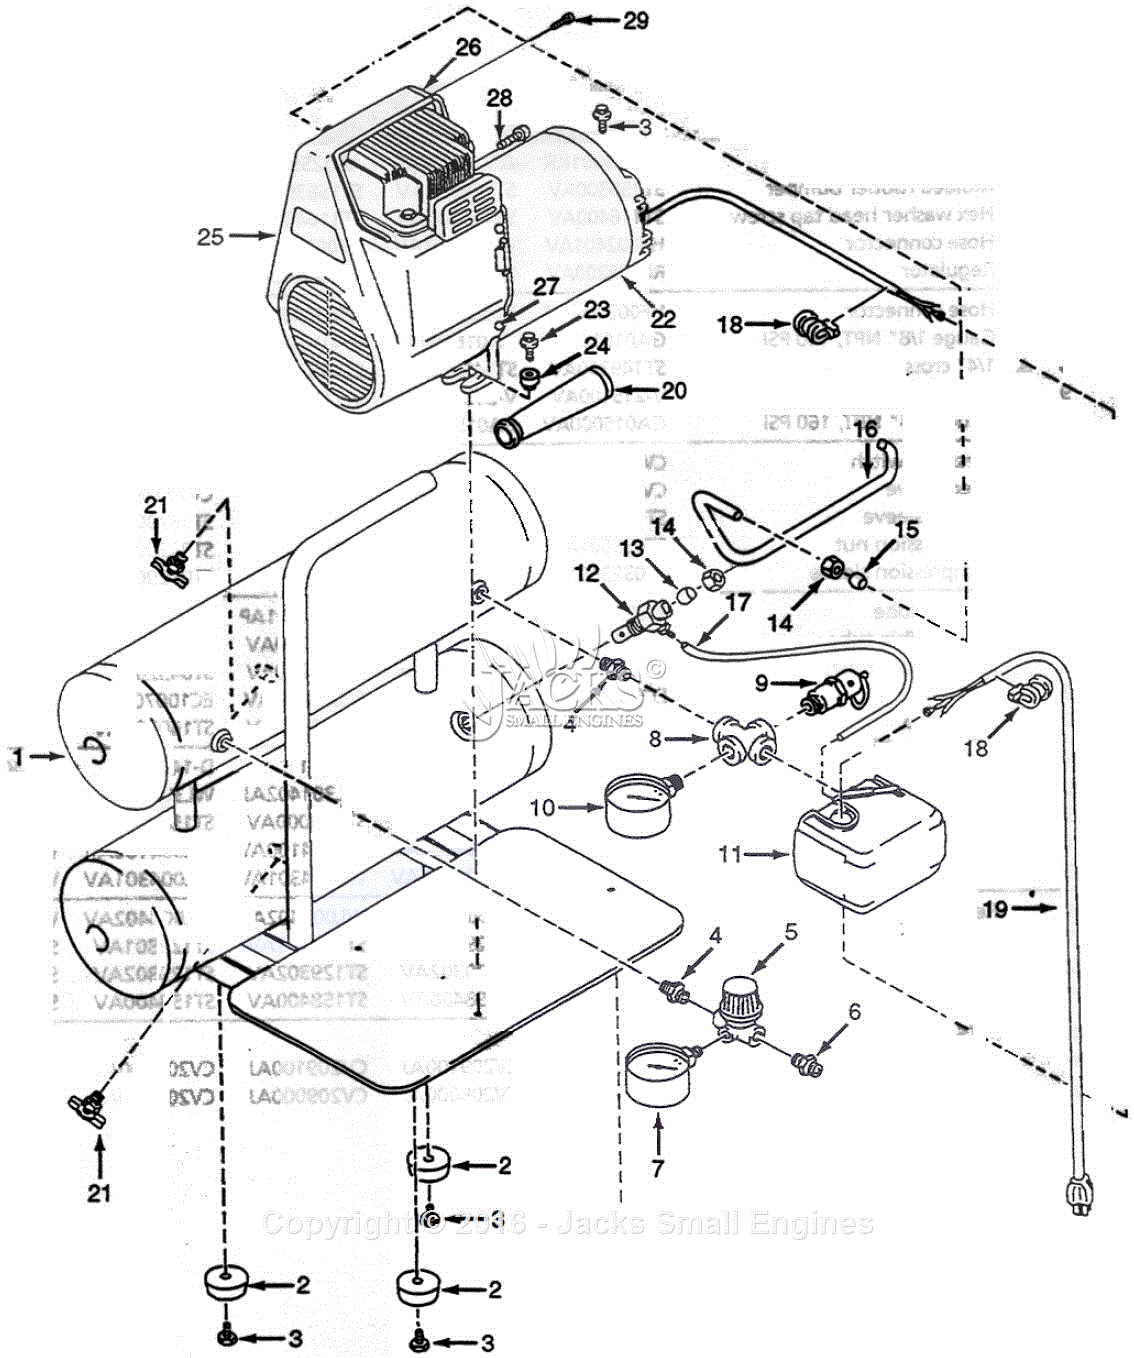 Air compressor parts - arabiamyte